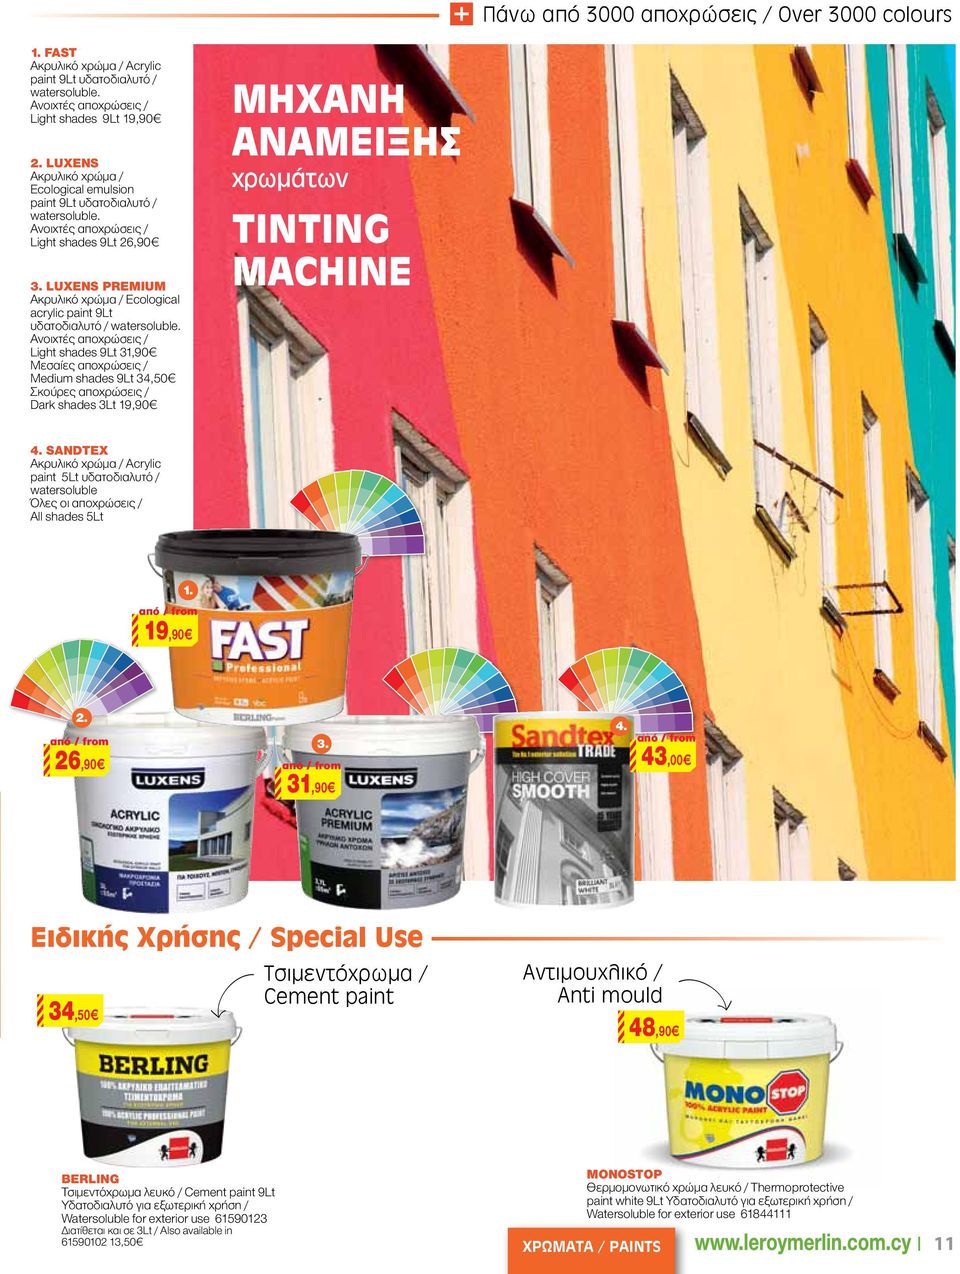 LUXENS PREMIUM Ακρυλικό χρώμα / Ecological acrylic paint 9Lt υδατοδιαλυτό / watersoluble.